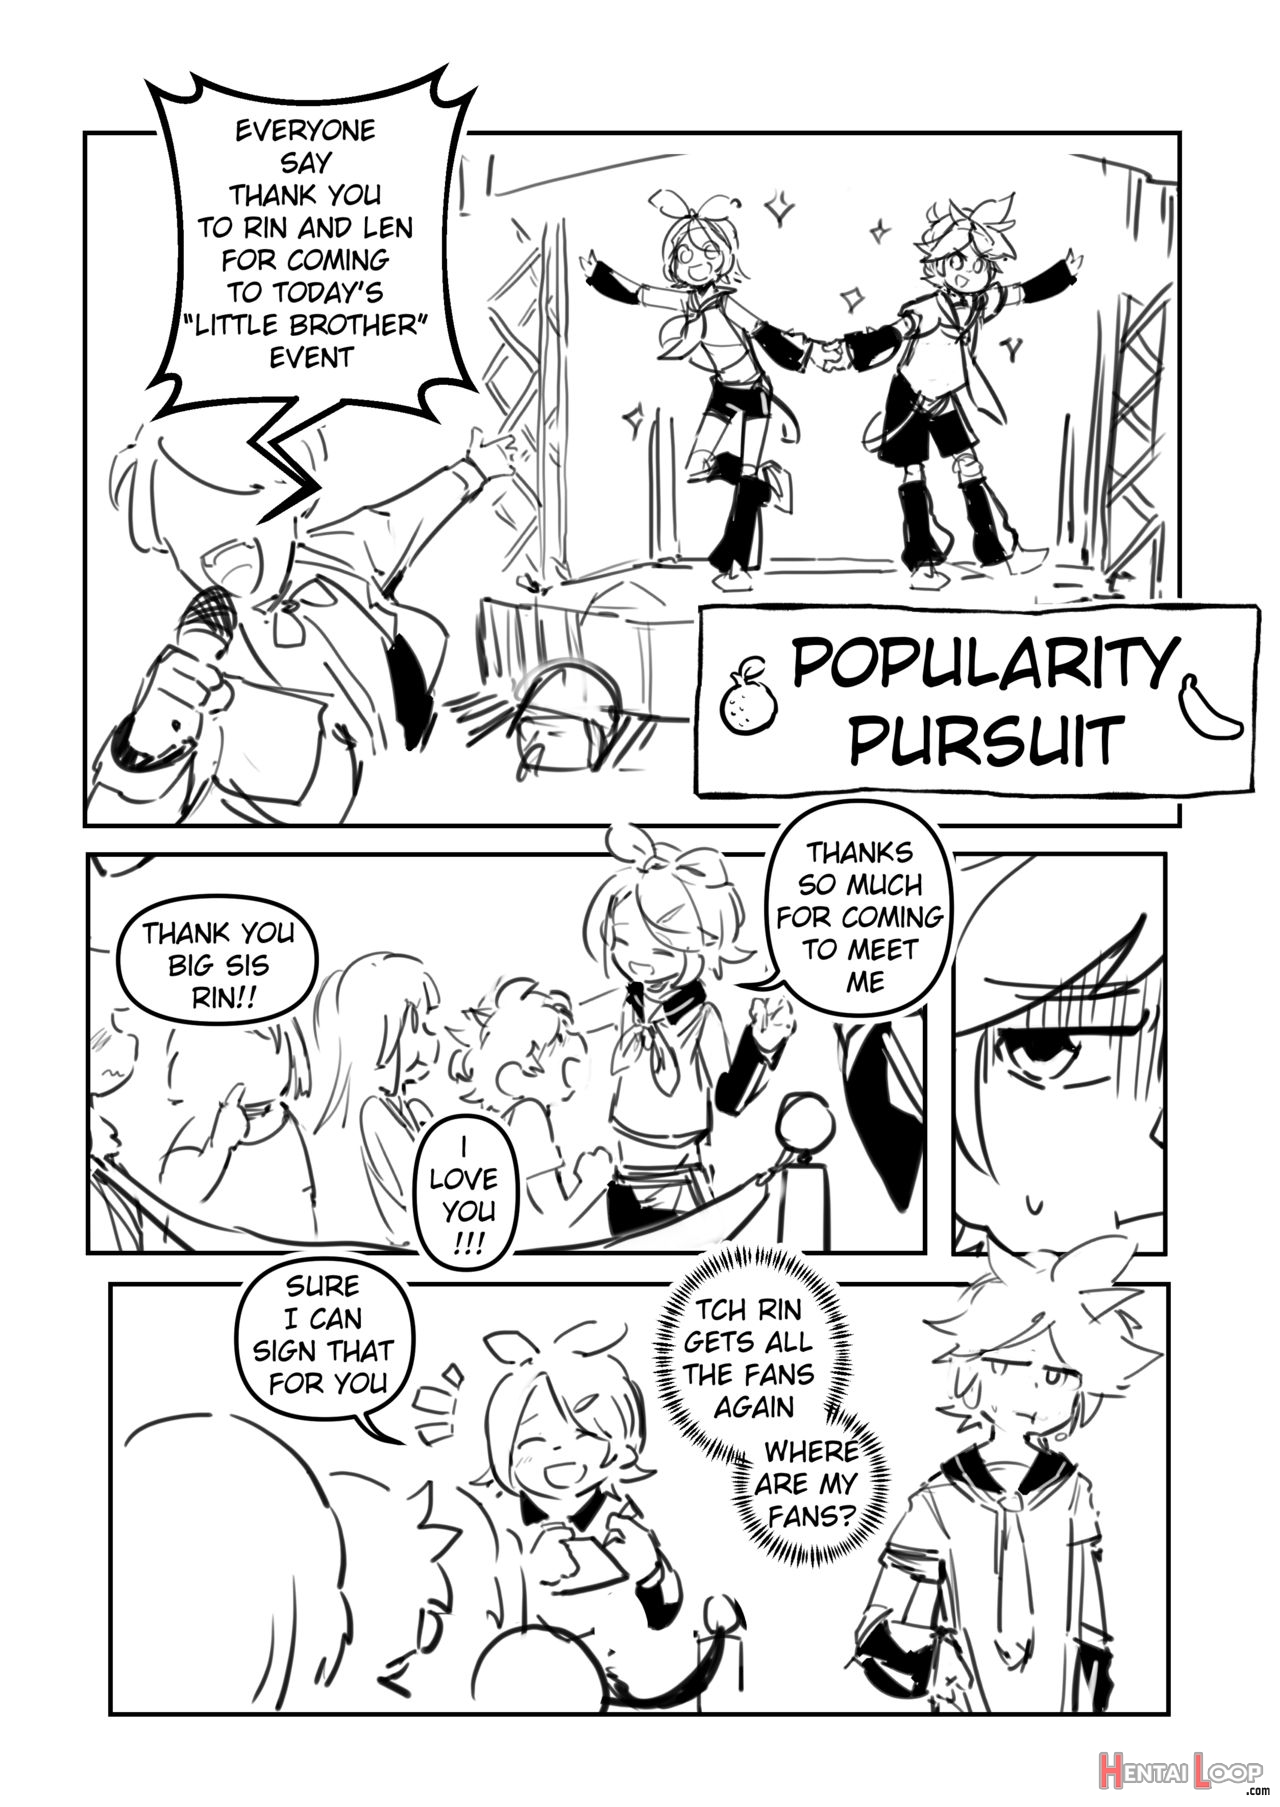 Popularity Pursuit page 1